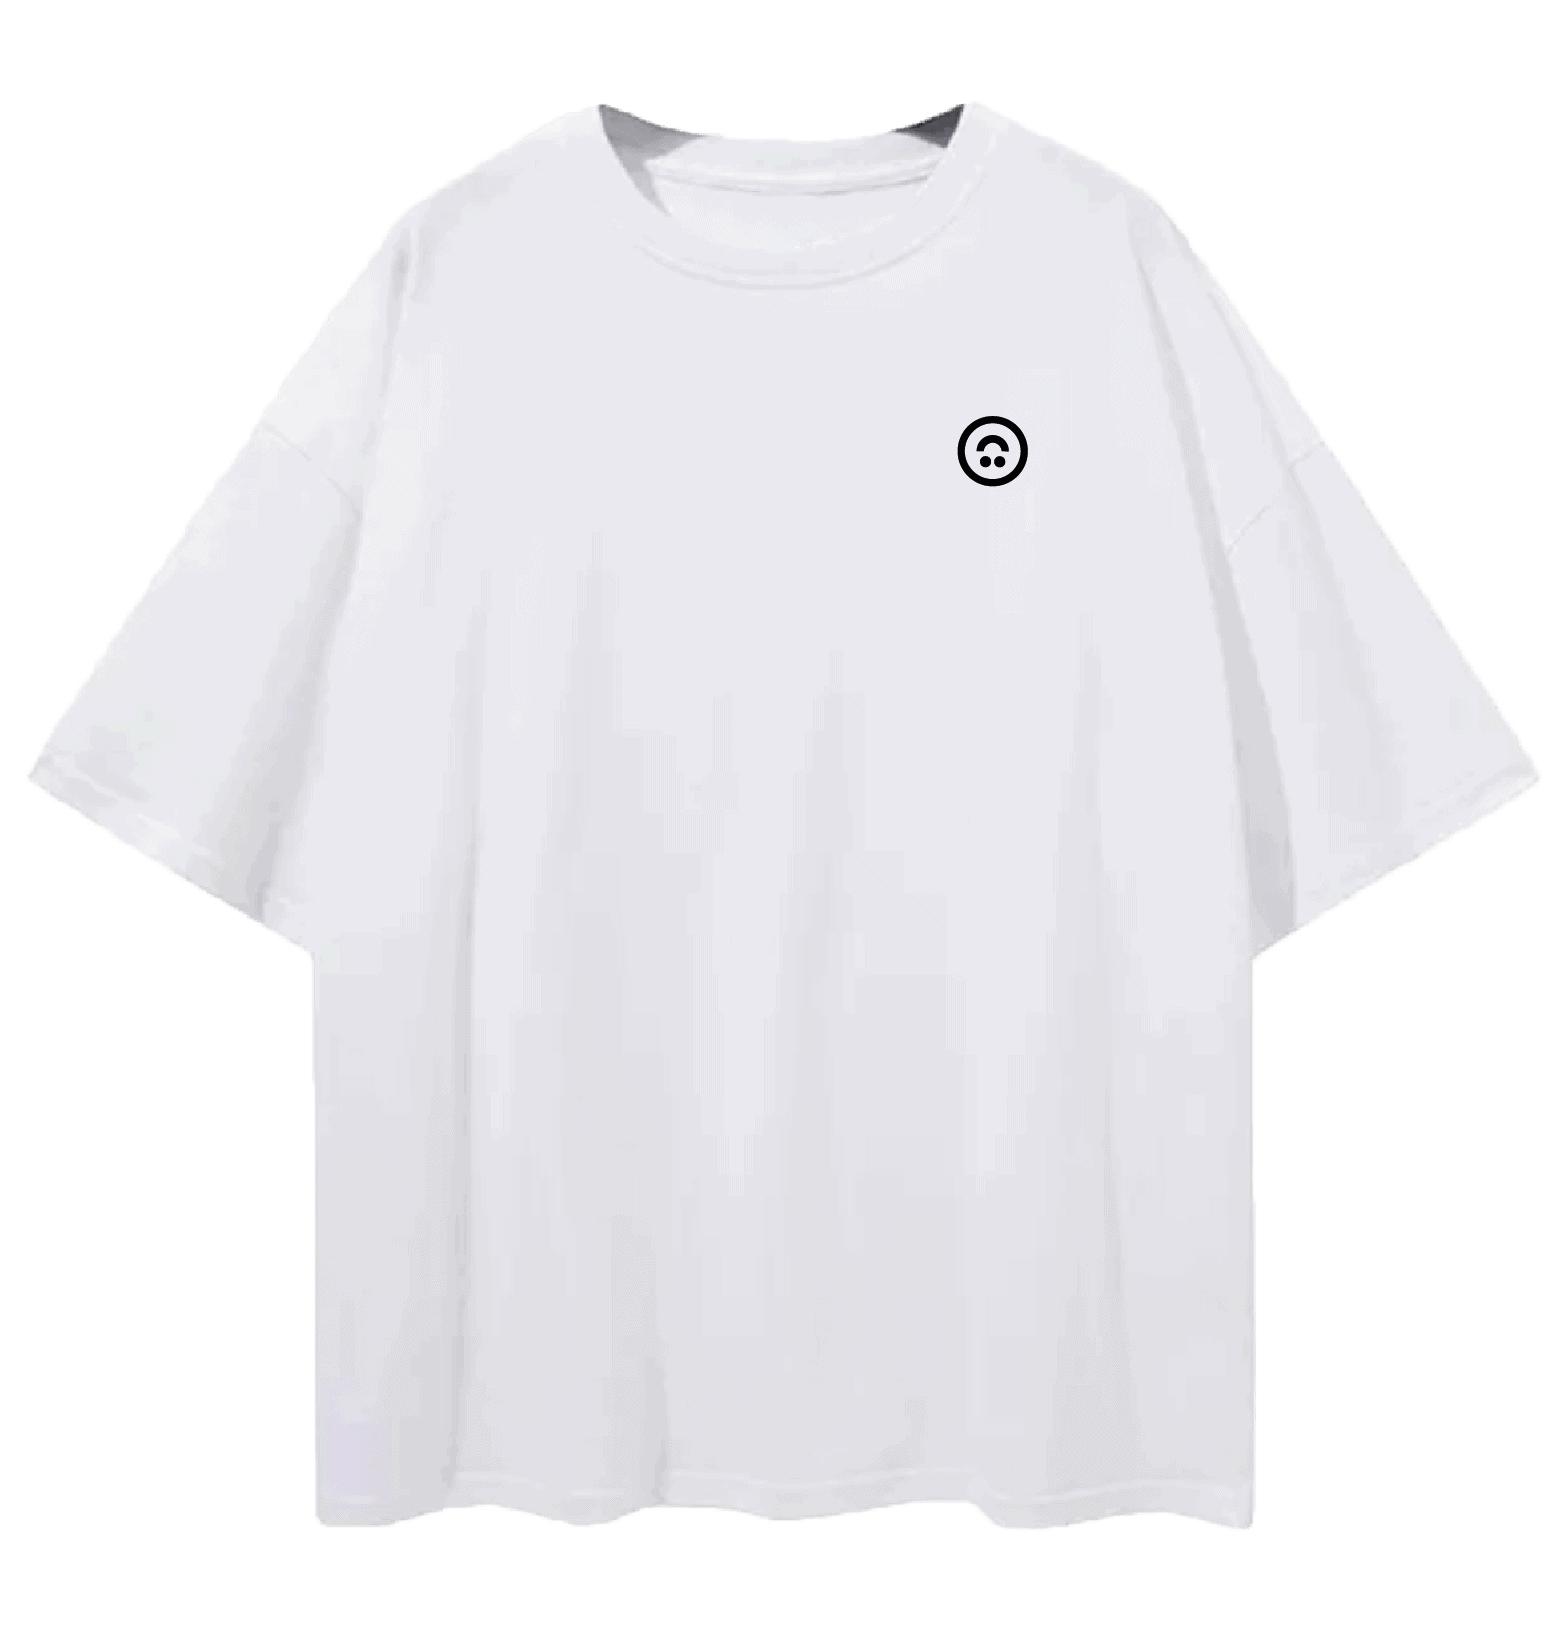 JOH-T-shirt-White-Smiley logo